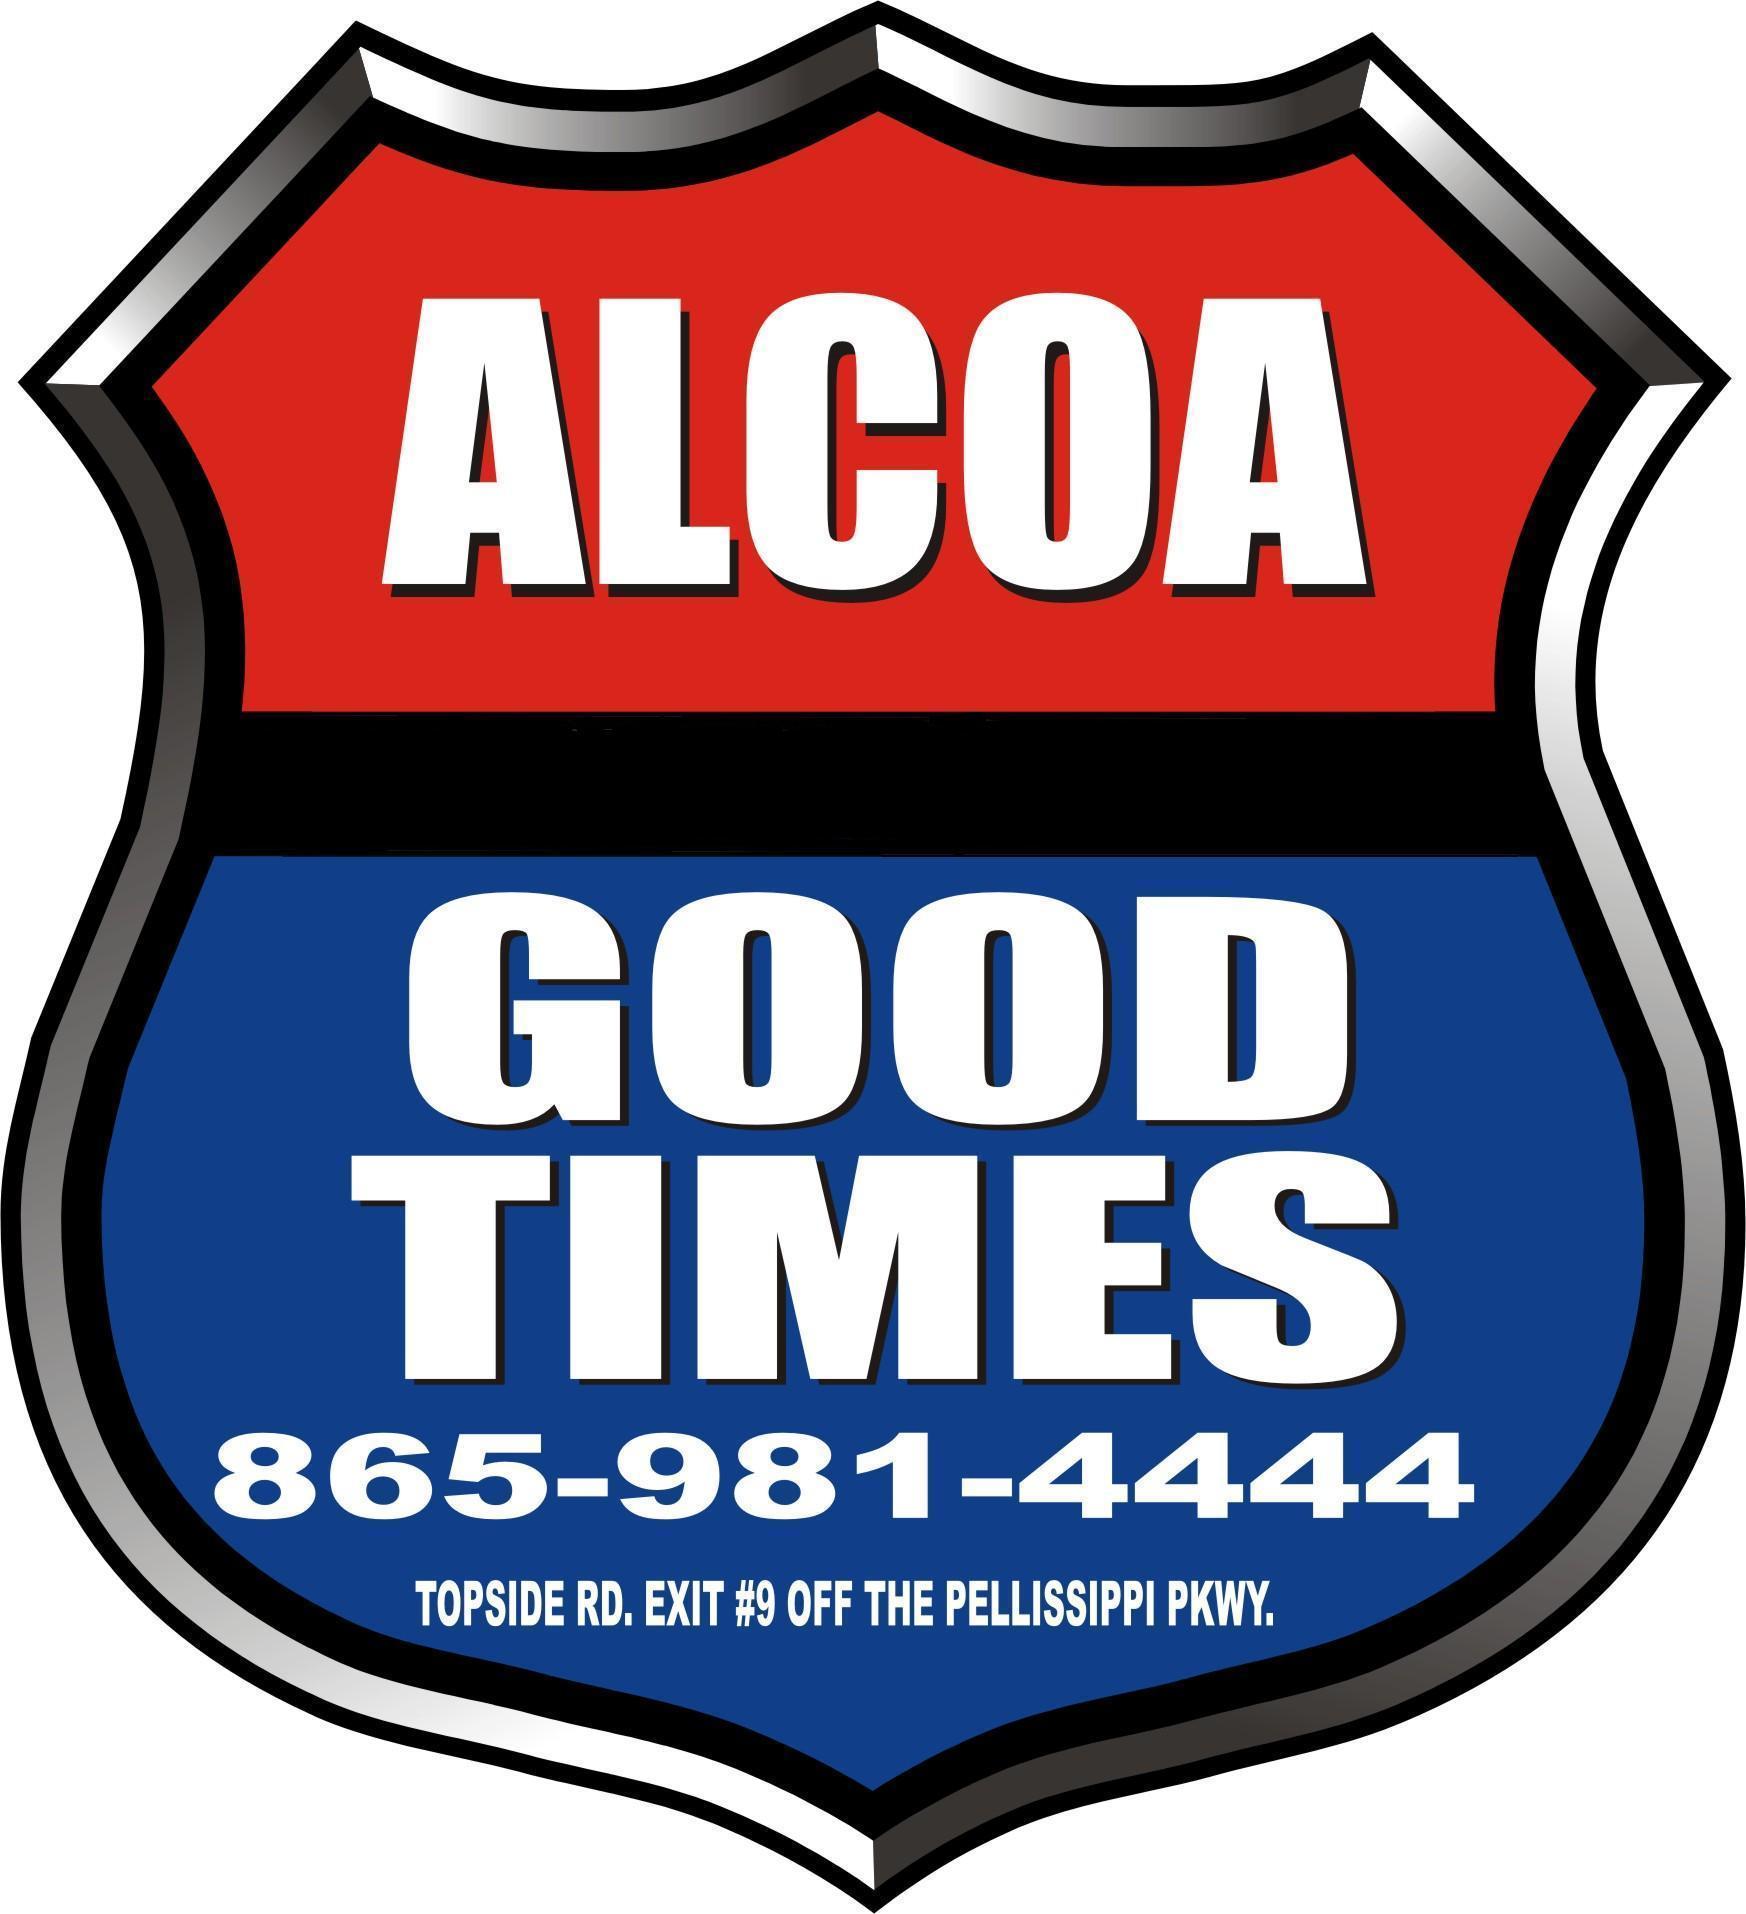 Alcoa Good Times, Inc